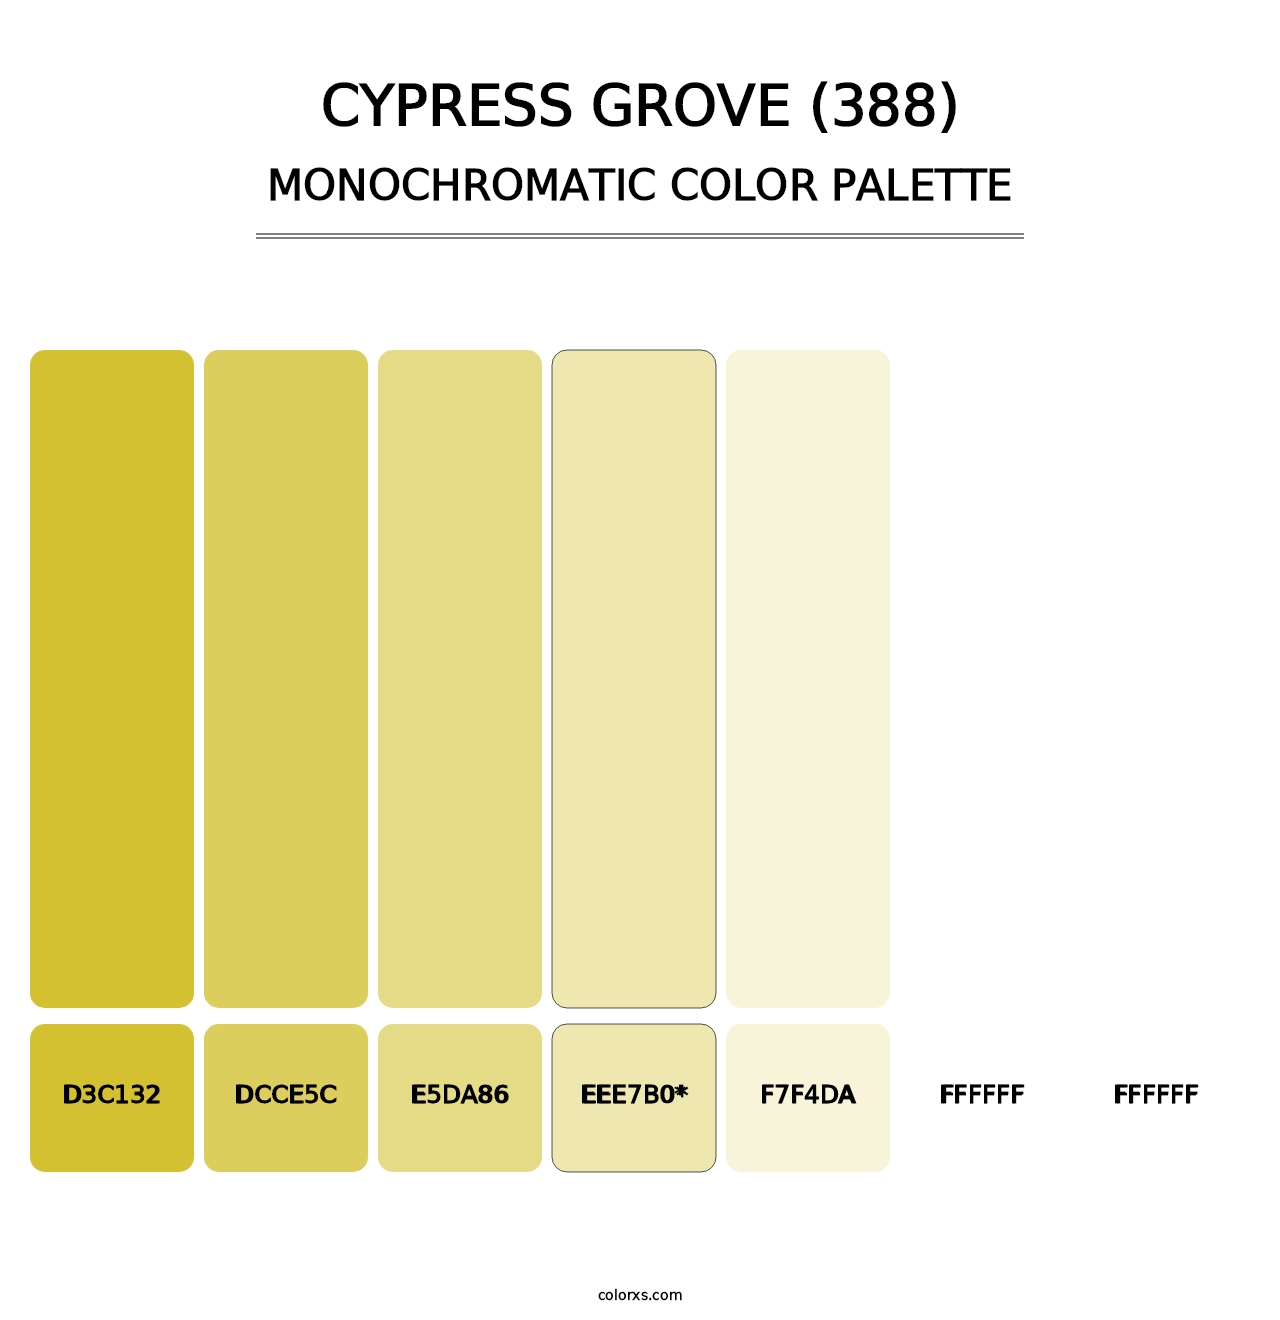 Cypress Grove (388) - Monochromatic Color Palette